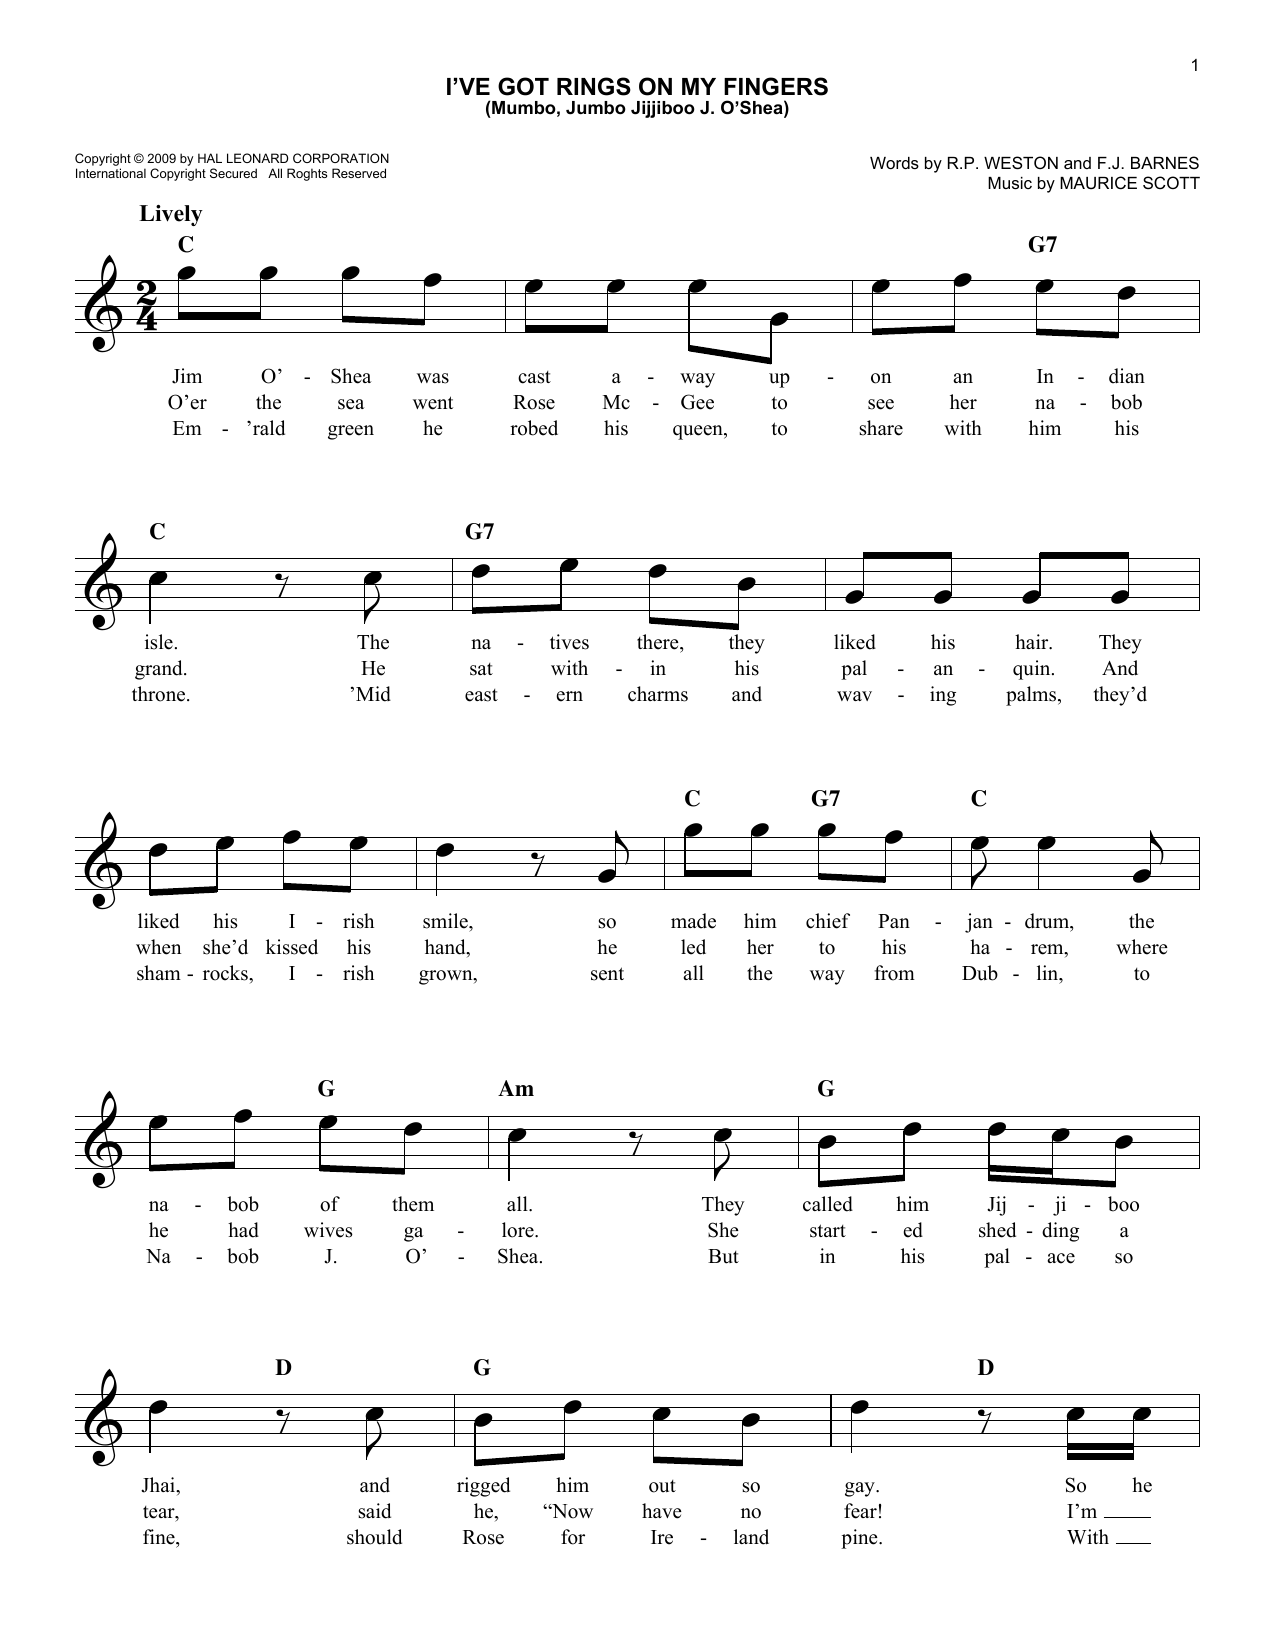 Maurice Scott I've Got Rings On My Fingers (Mumbo, Jumbo Jijjiboo J. O'Shea) Sheet Music Notes & Chords for Melody Line, Lyrics & Chords - Download or Print PDF